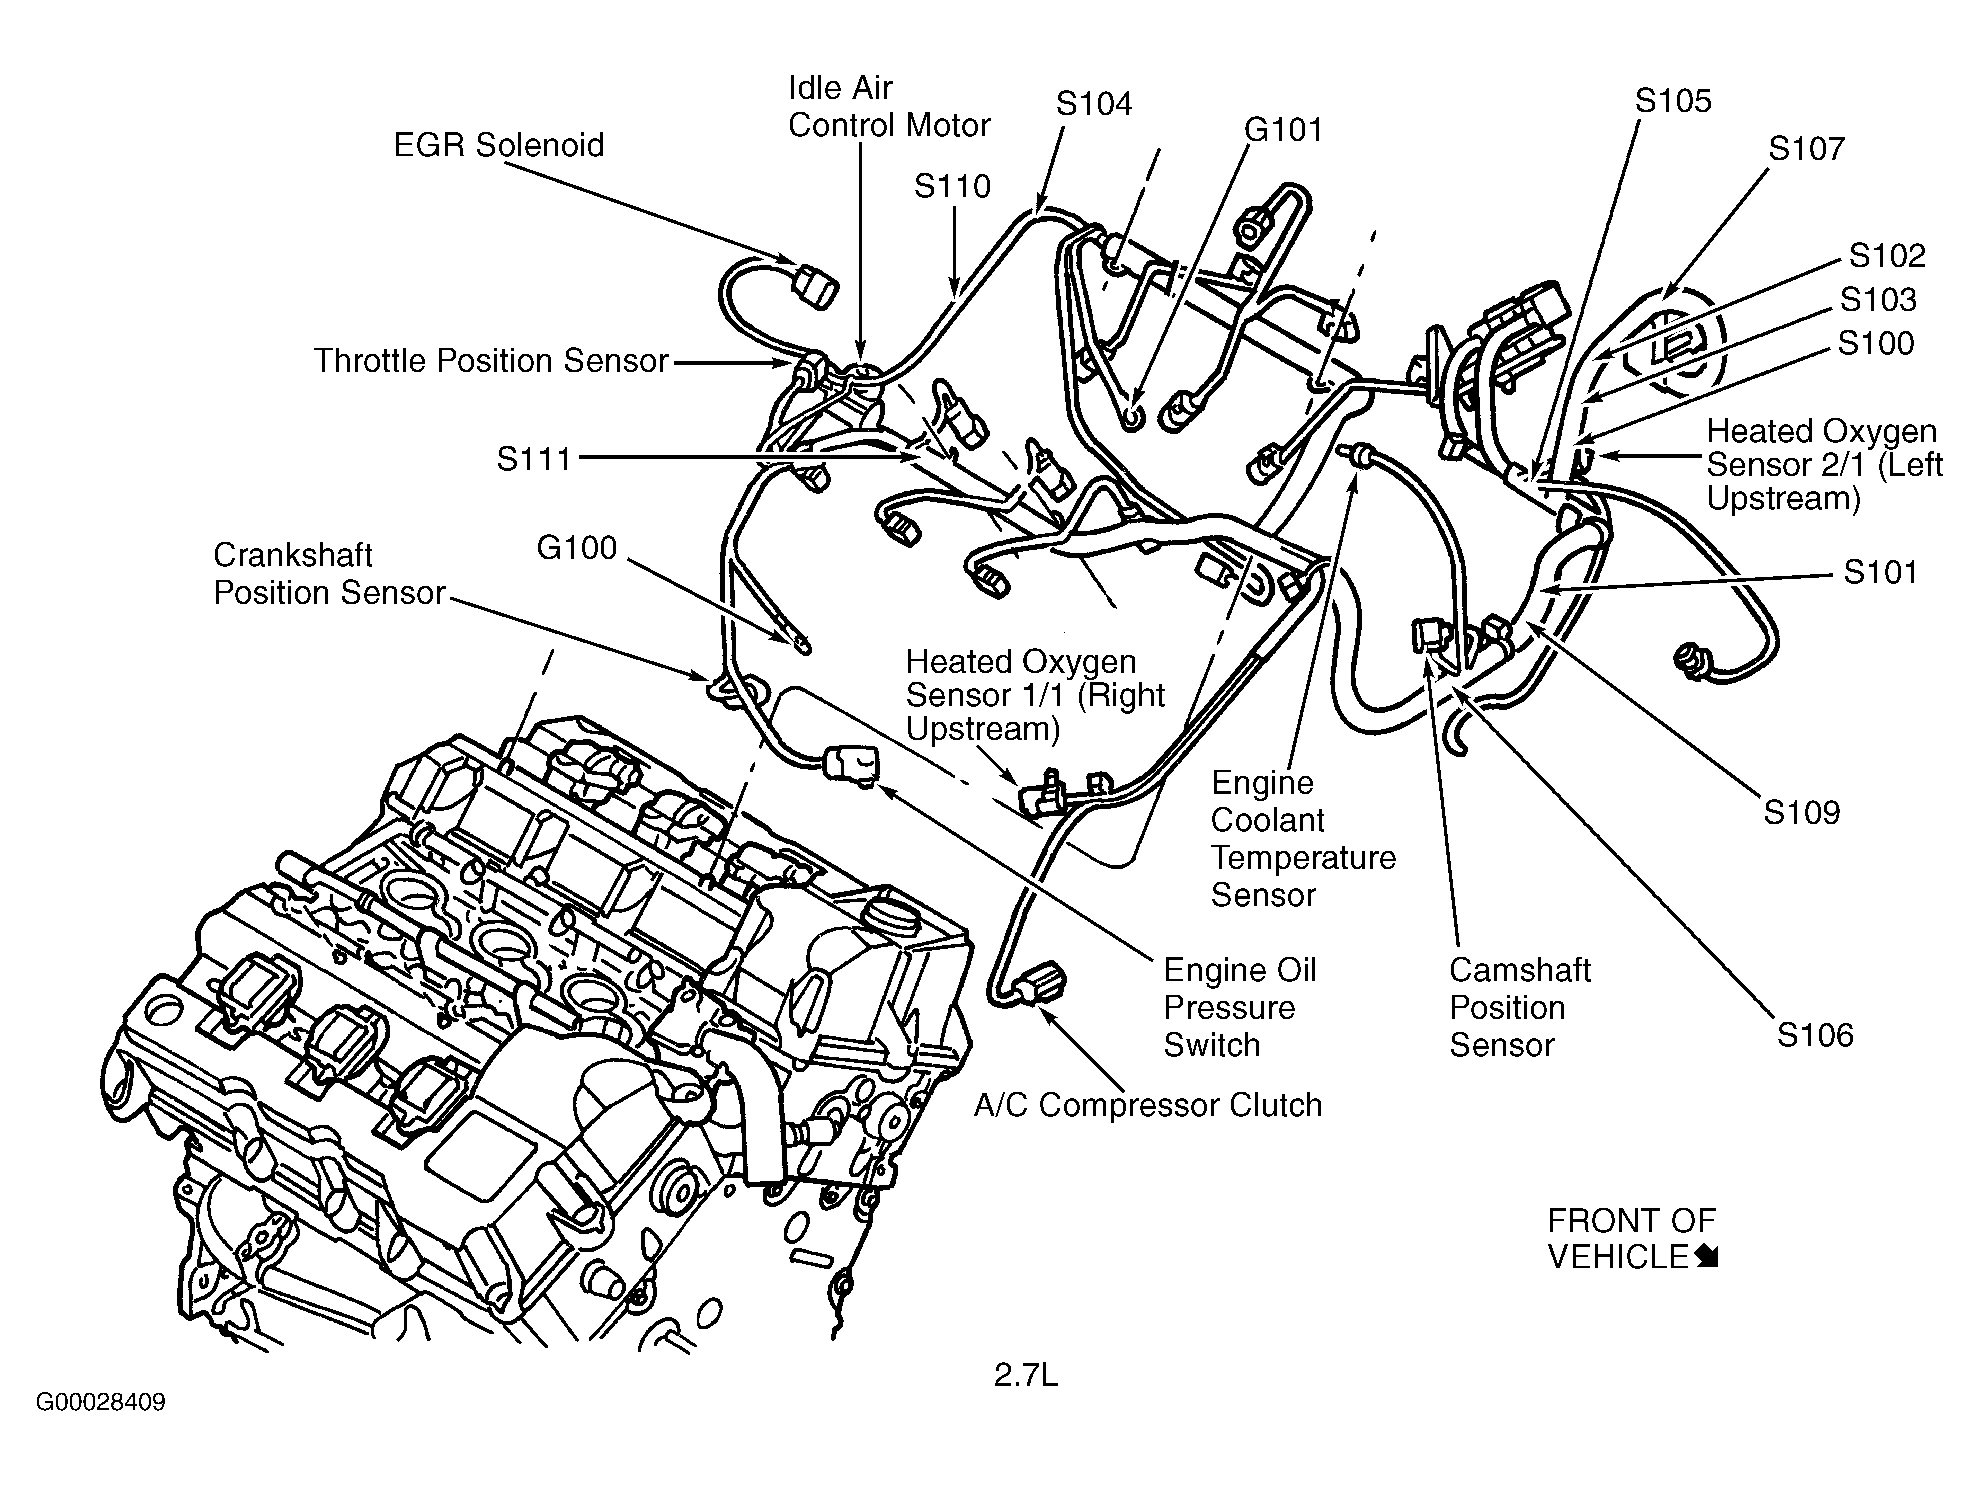 Dodge Intrepid SE 2001 - Component Locations -  Top Of Engine (2.7L)